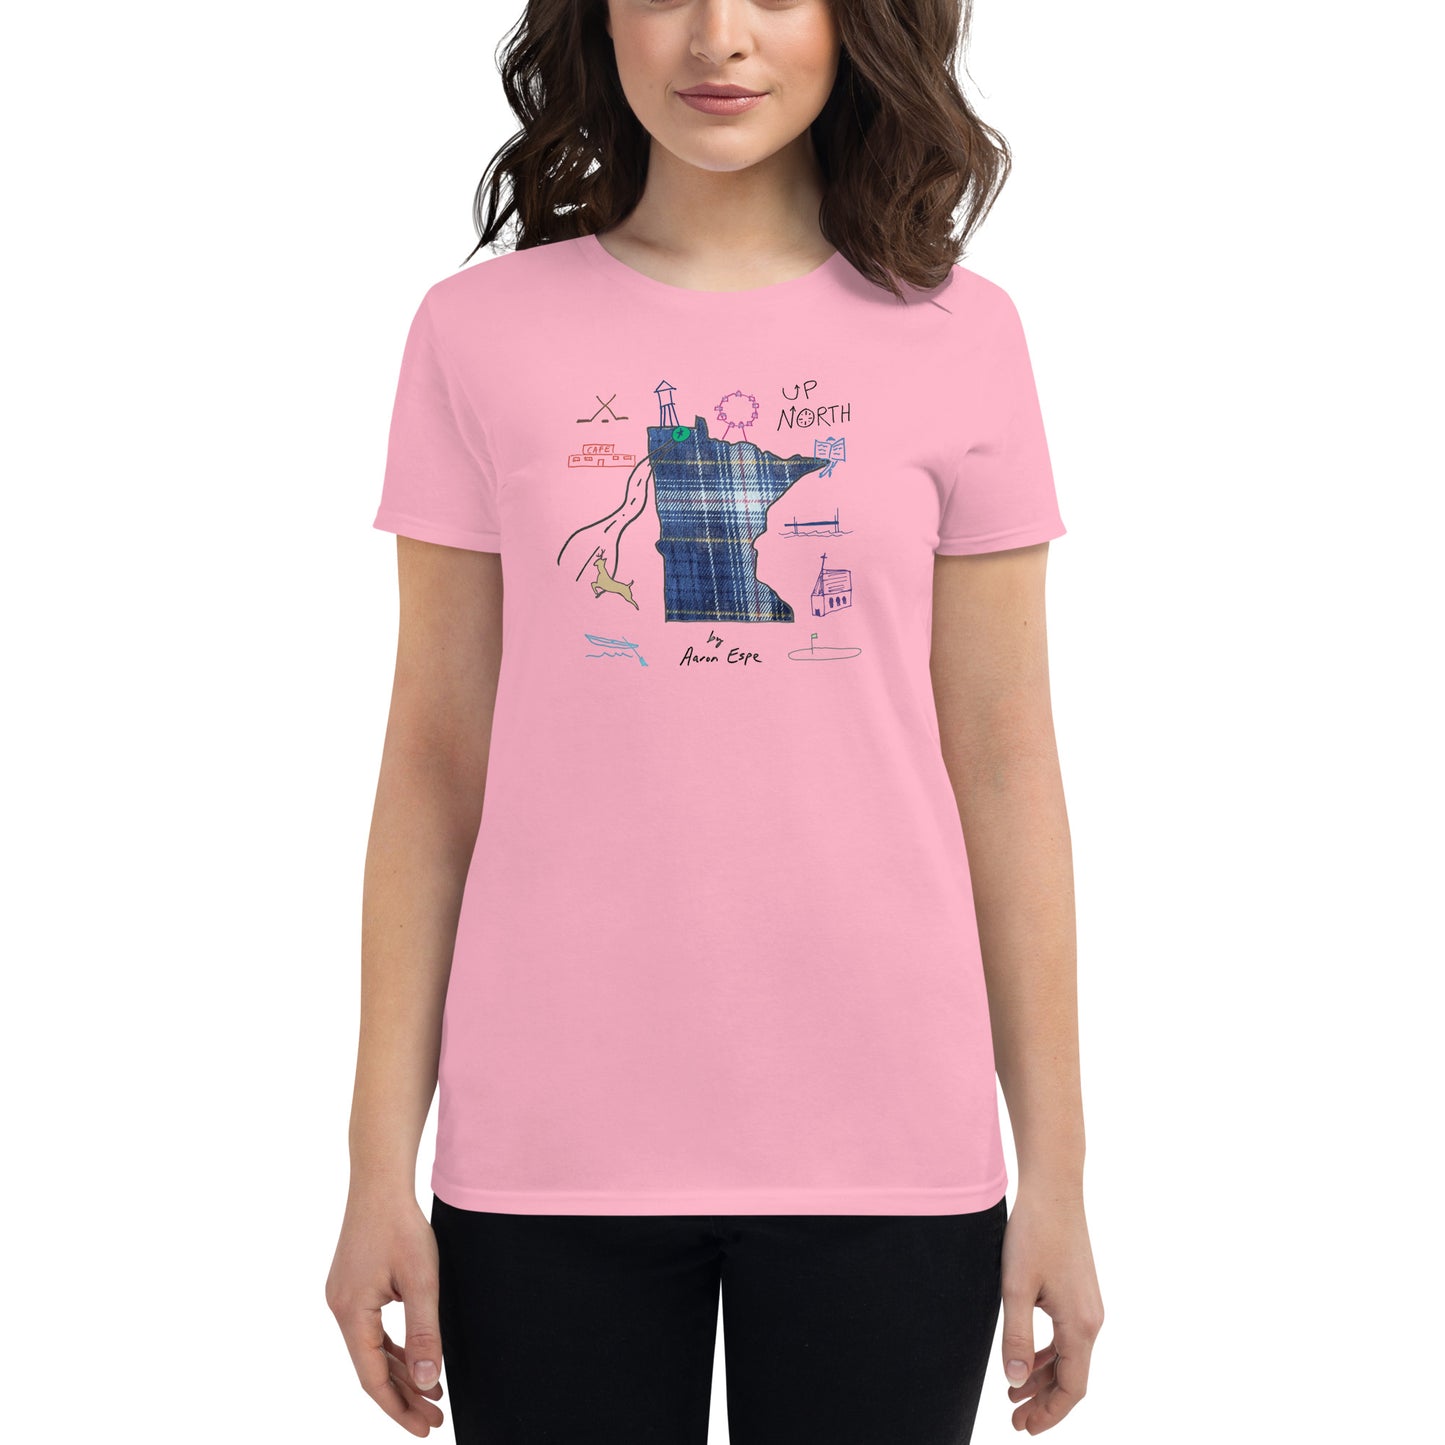 Women's Crewneck T-Shirt Up North Art